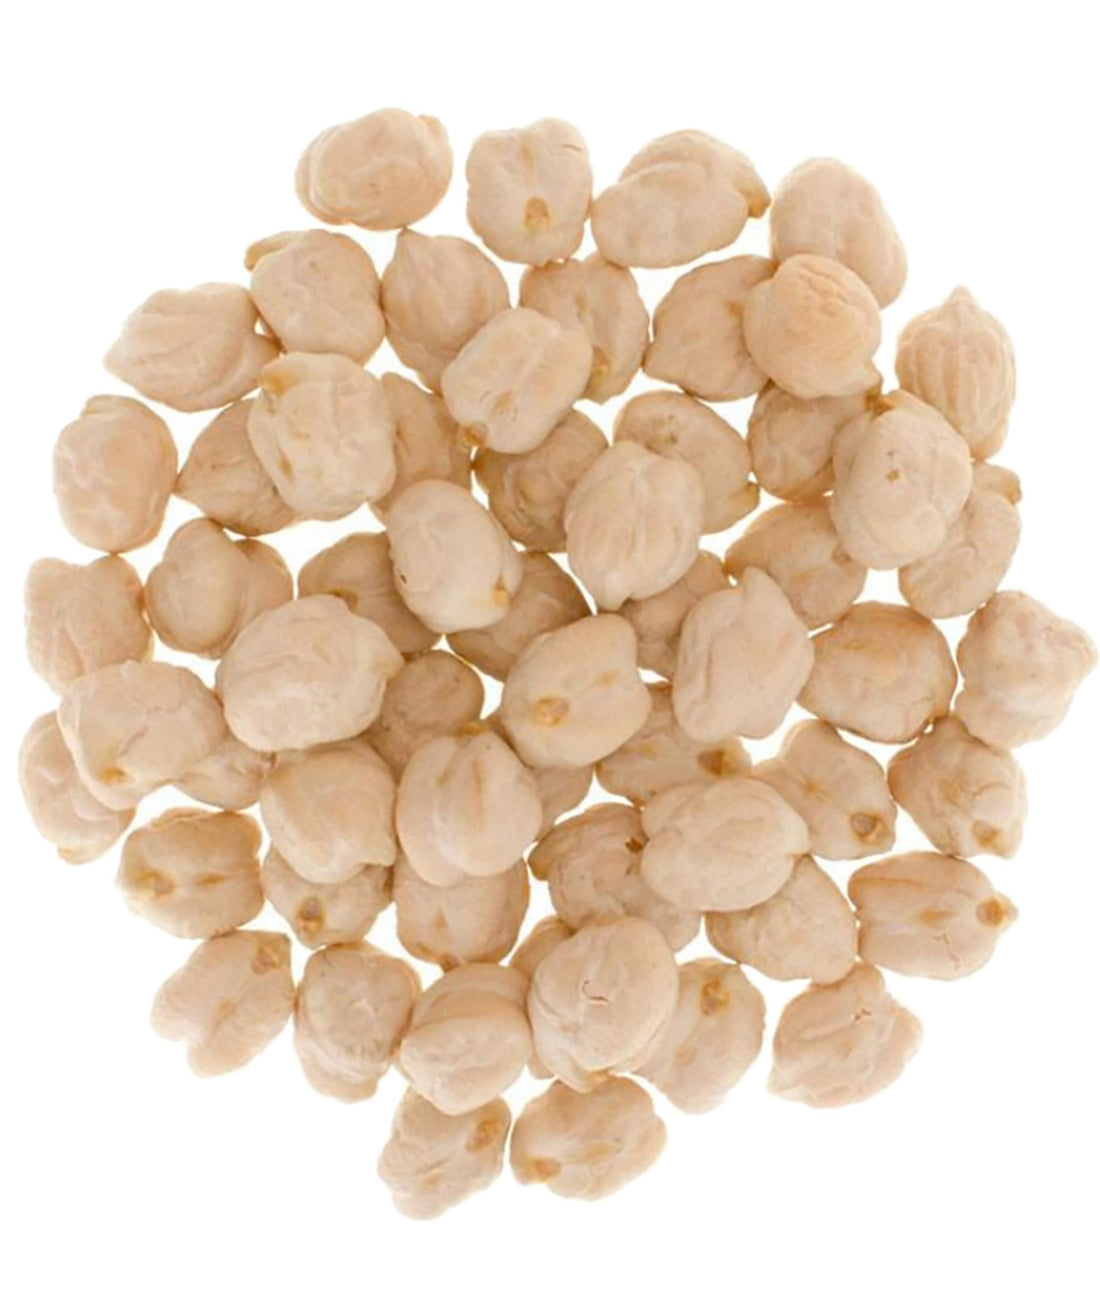 Palouse Brand Chickpeas/Garbanzo Beans, 3 LBS Cotton Drawstring Bag